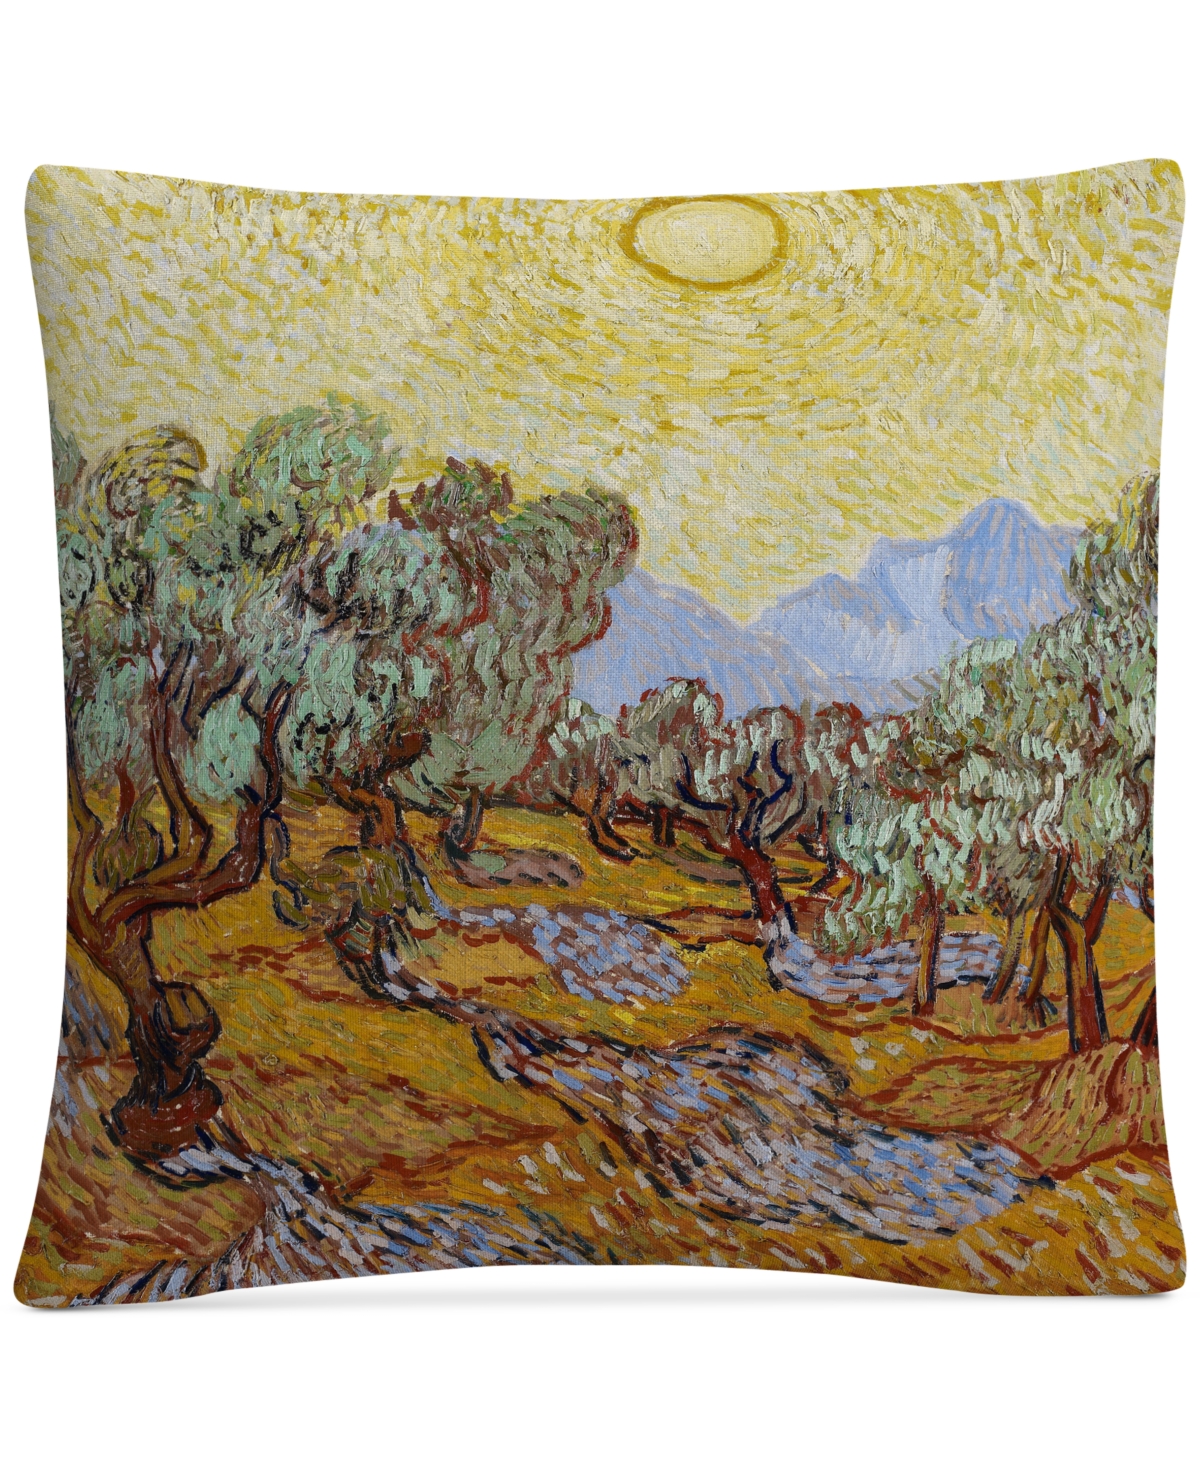 Vincent Van Gogh Olive Trees 1889Decorative Pillow, 16 x 16